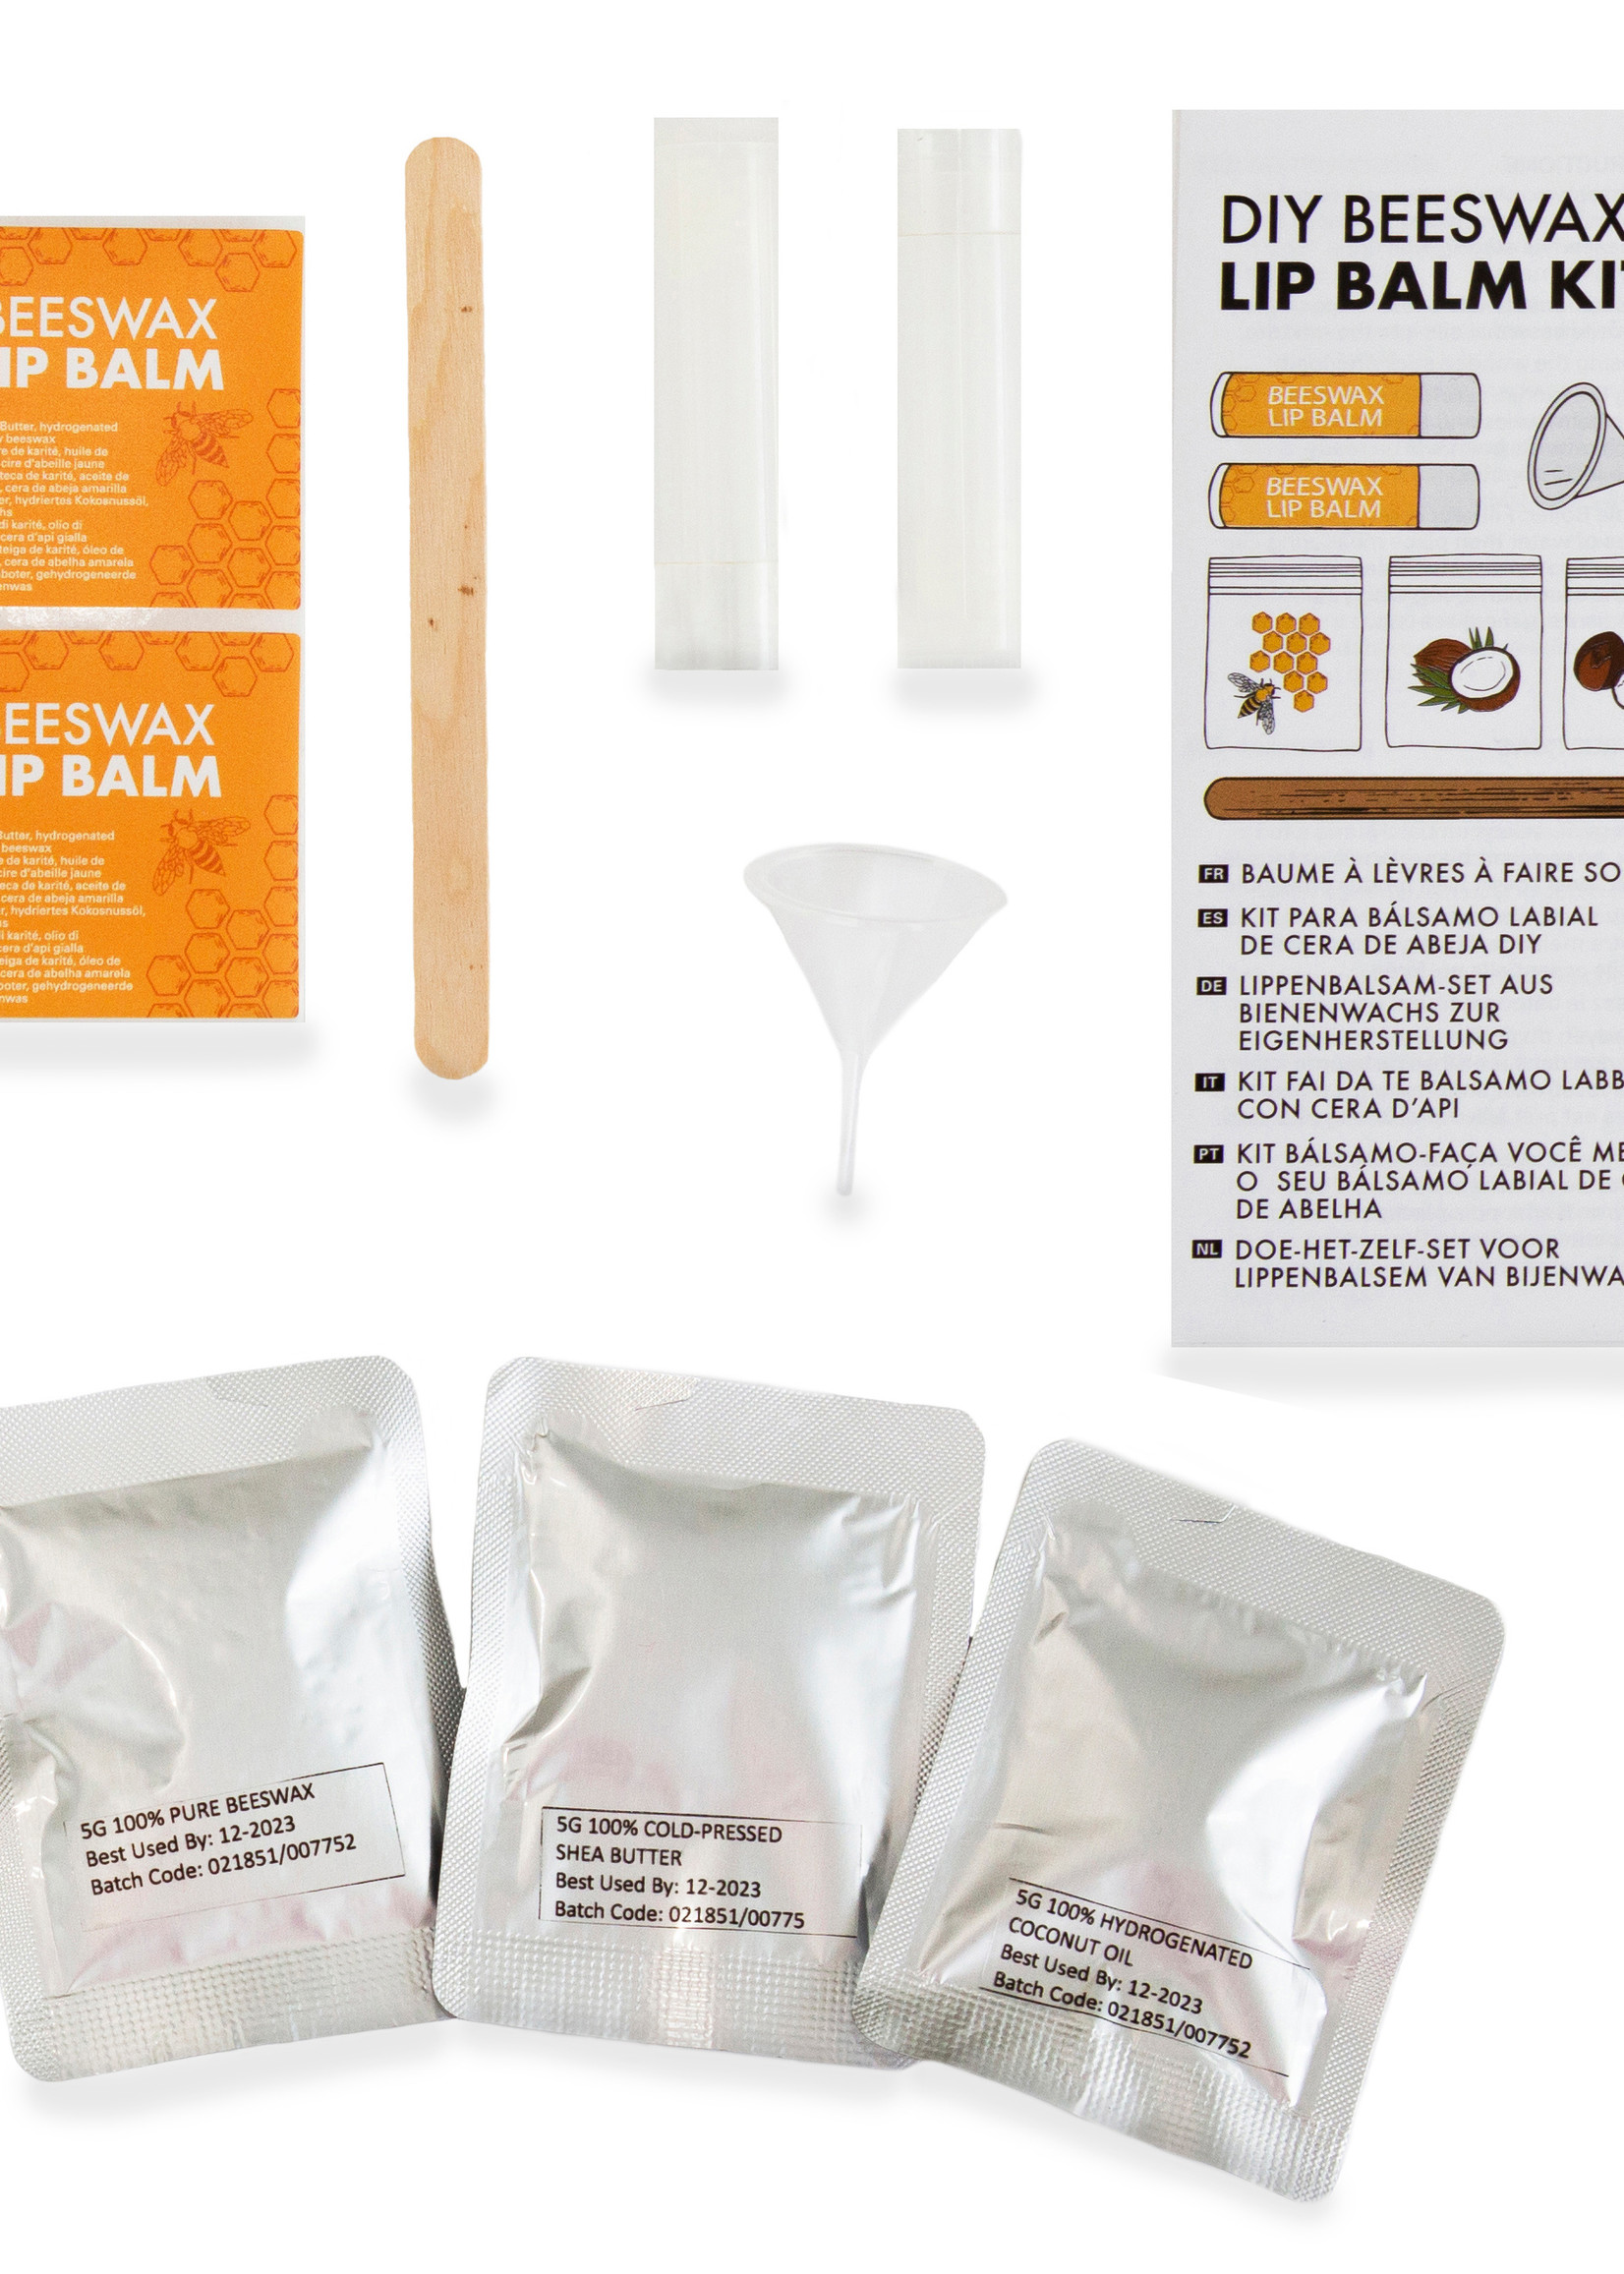 DIY Beeswax Lip Balm Kit - Box